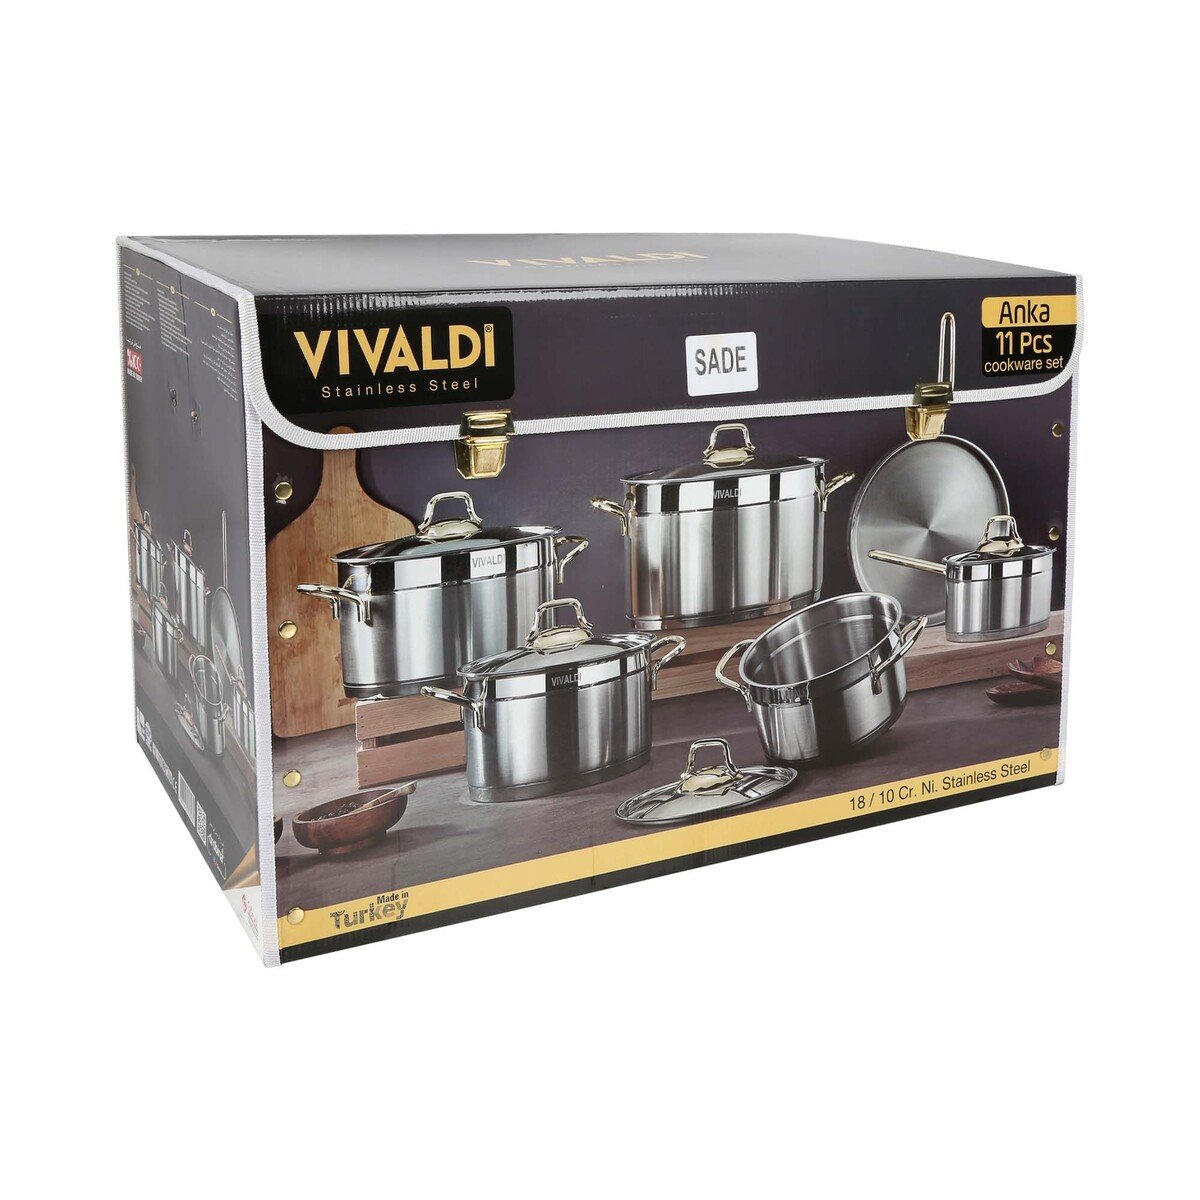 Vivaldi Stainless Steel Cookware Set ANKA 11pcs